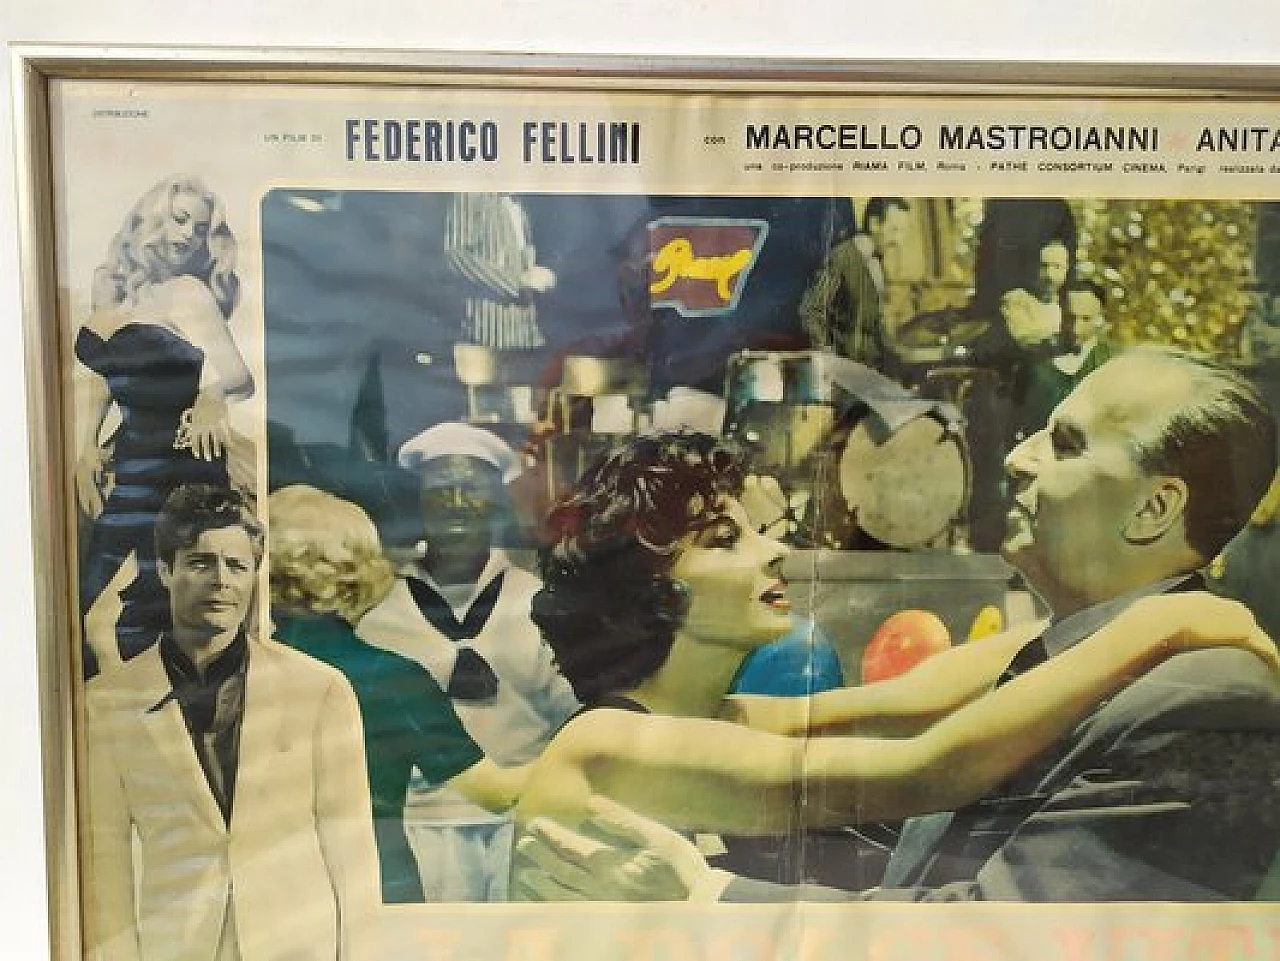 Poster of Federico Fellini's film La dolce vita by Cineriz, 1960s 2